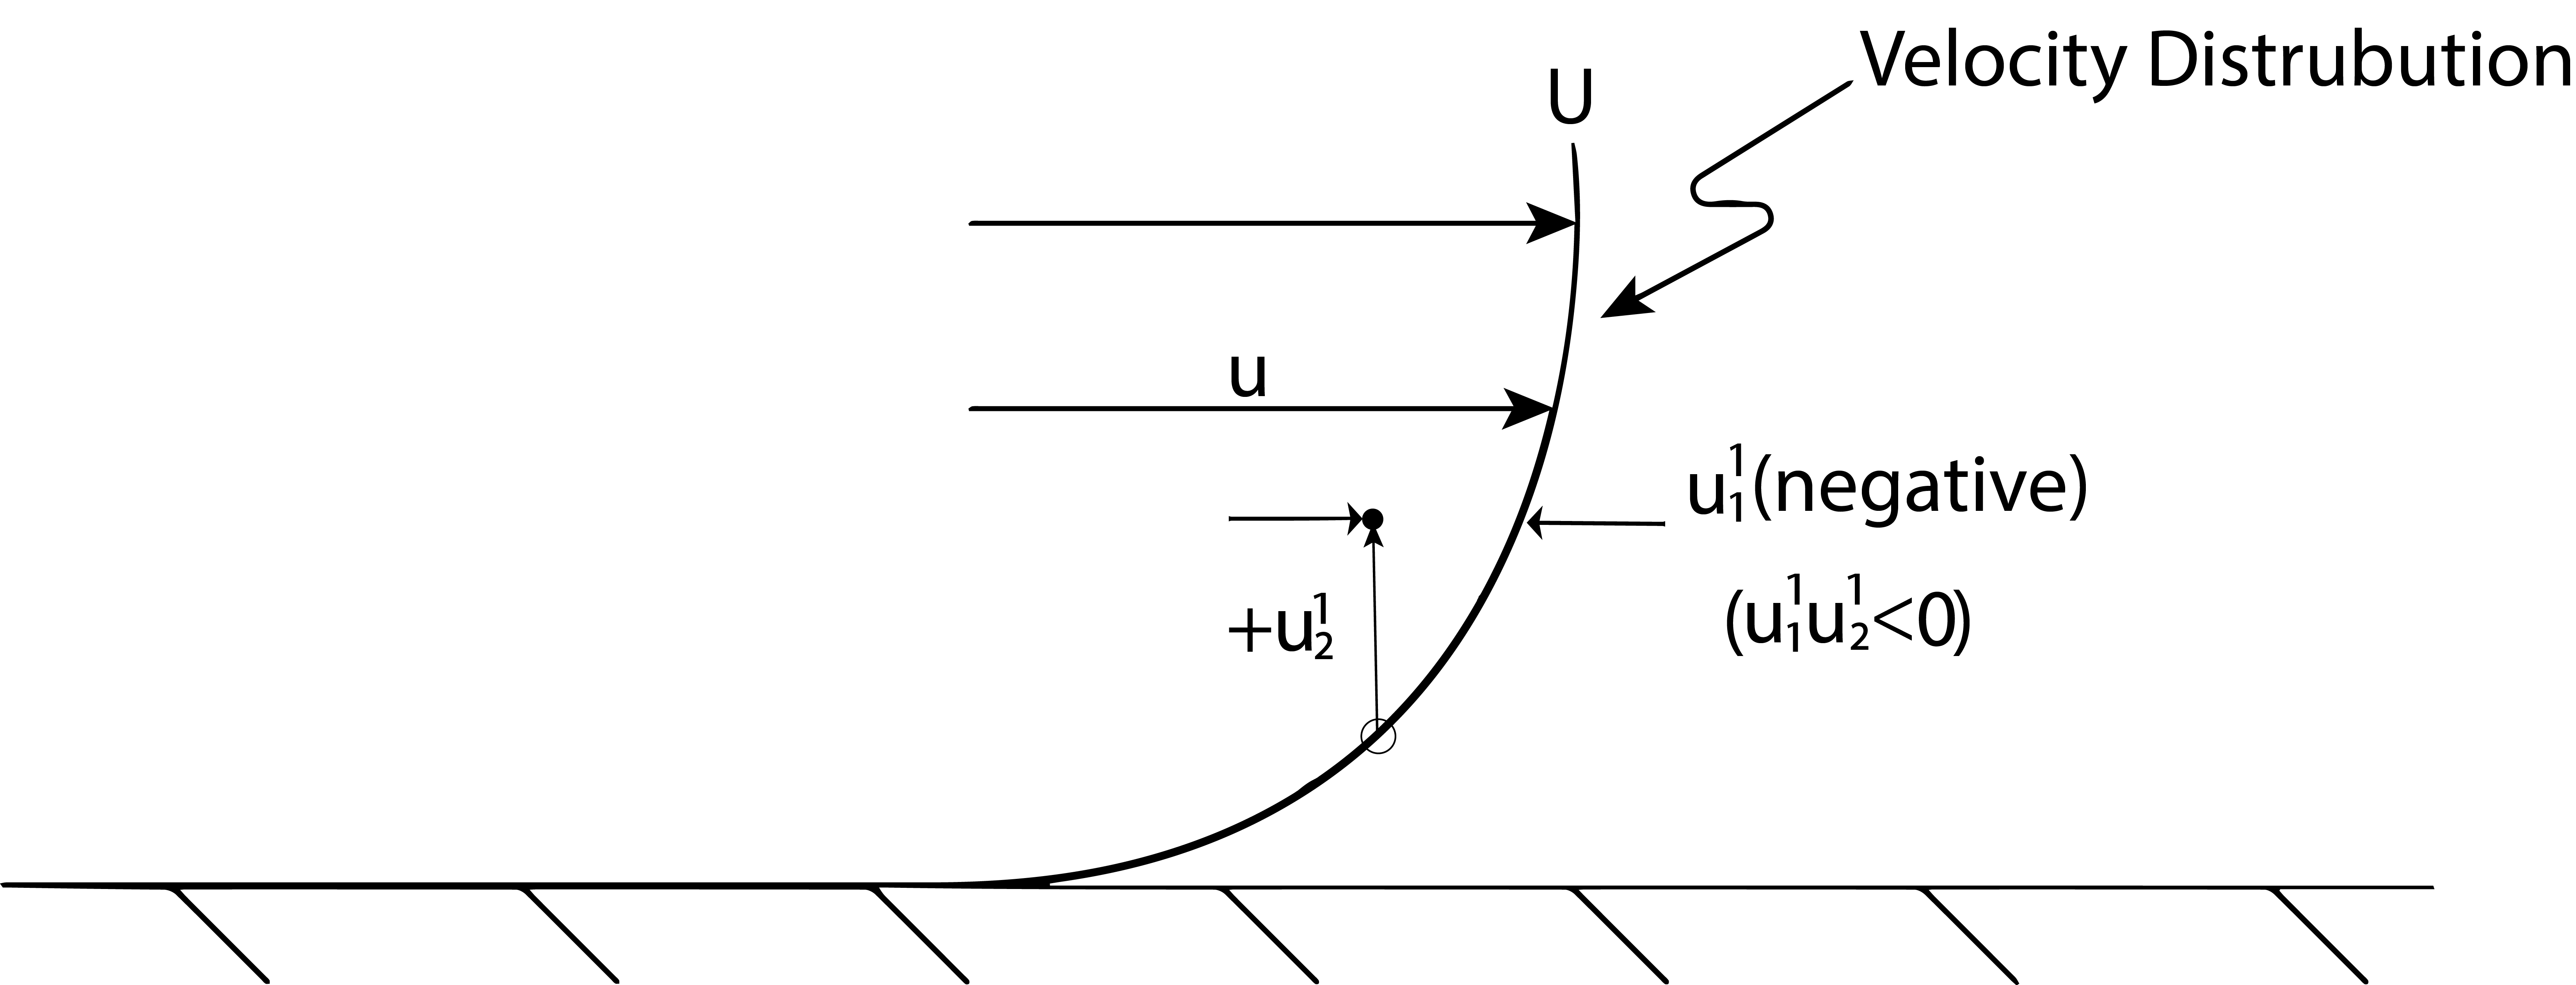 Figure 10.3